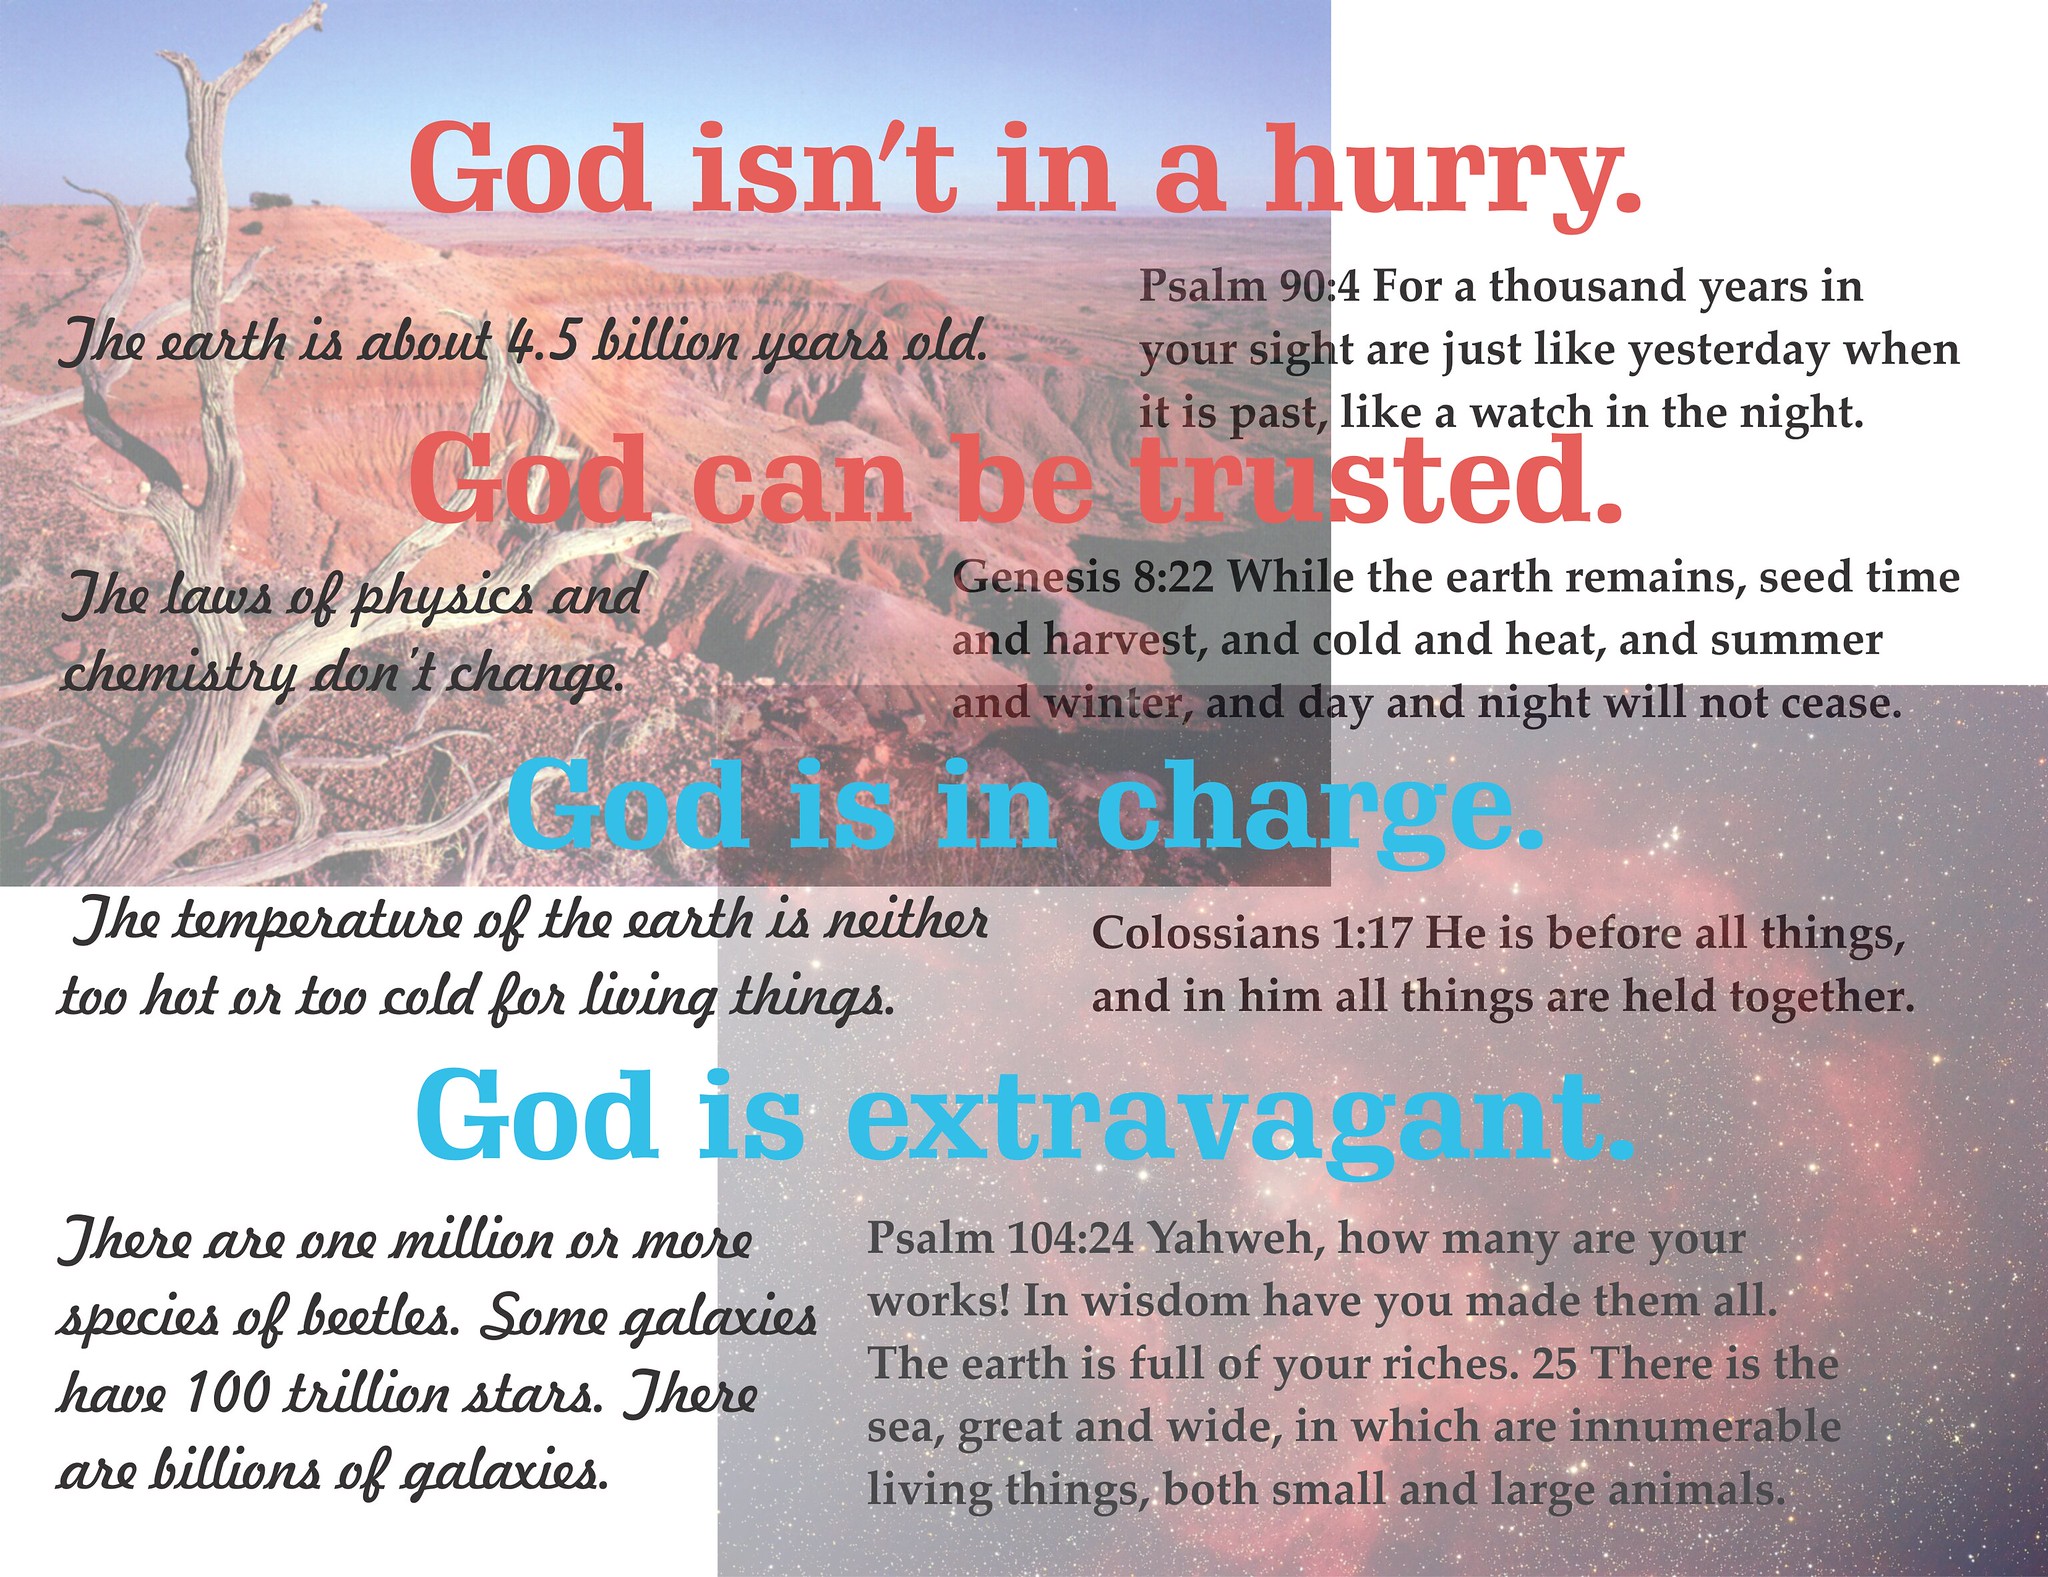 some characteristics of God